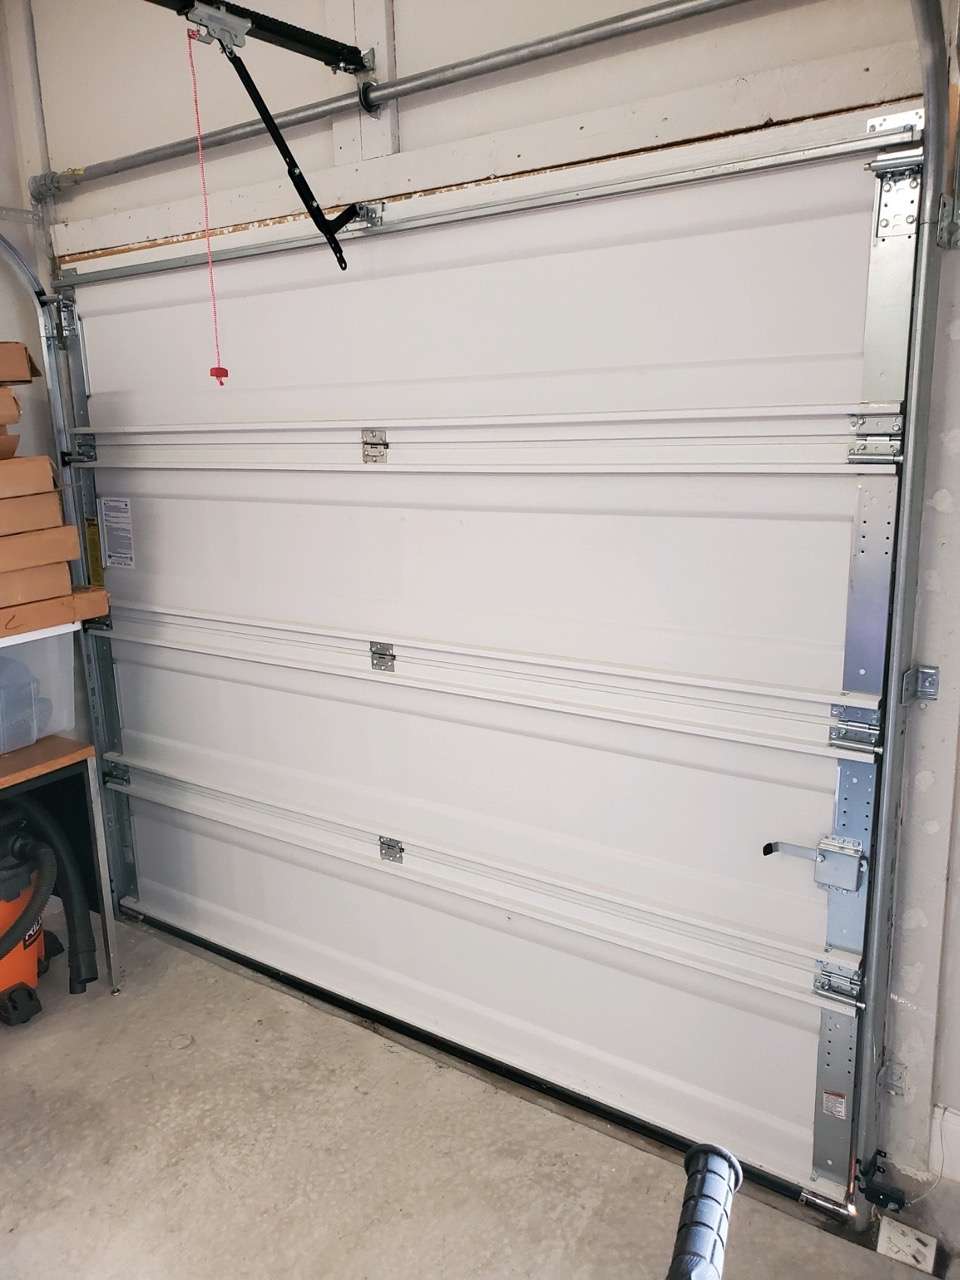 Wayne Dalton 9100 garage door installed by home builders. This garage door gets most of its strength from foam. You wan't to avoid having this garage door installed in your home.